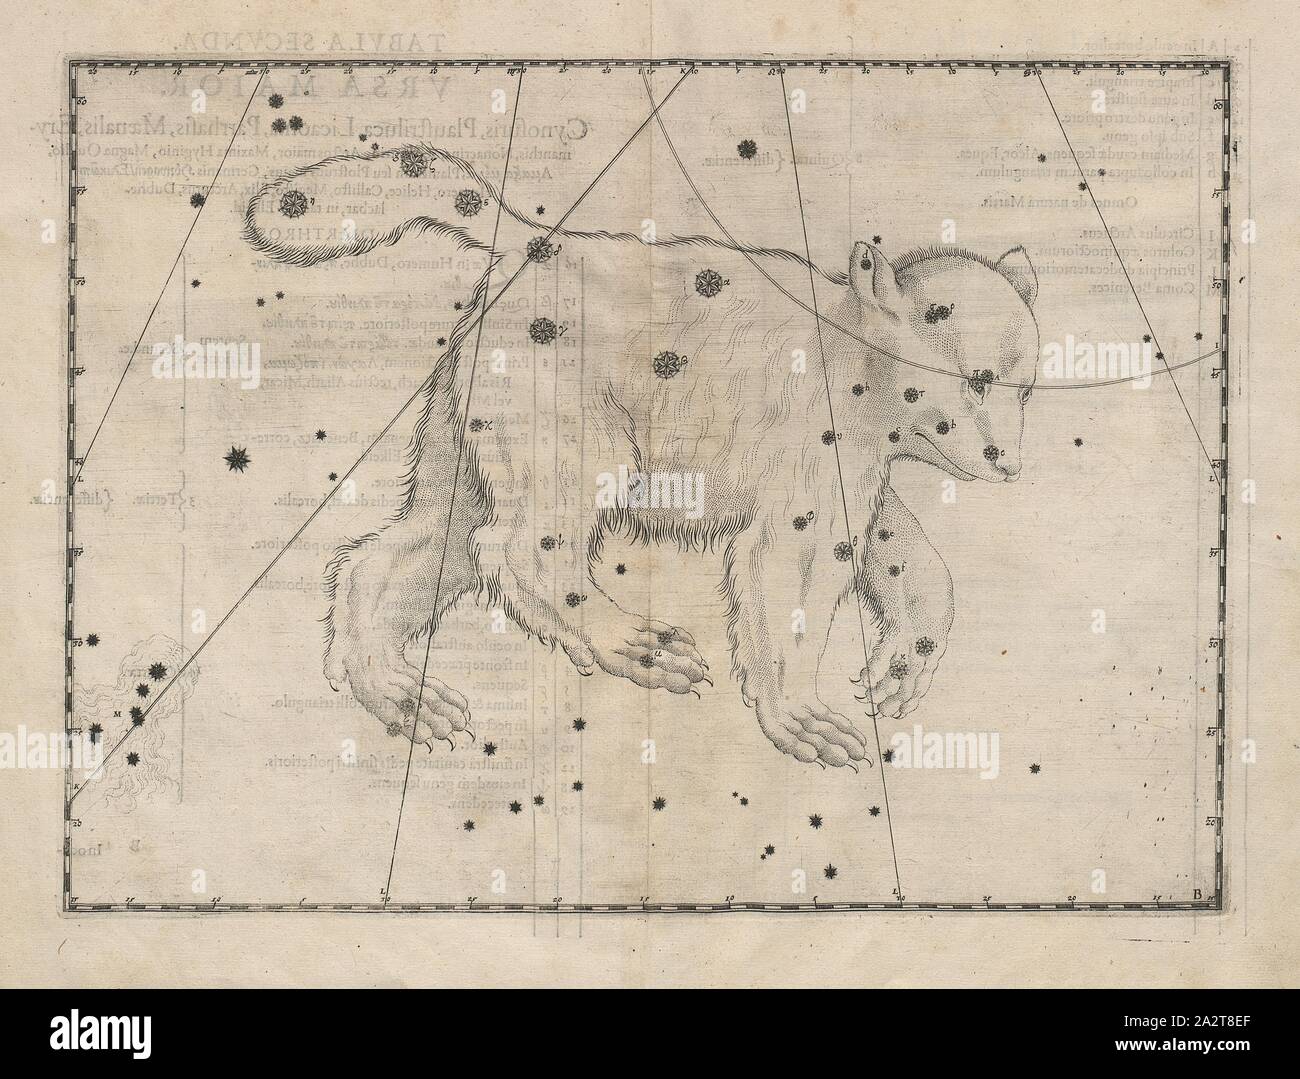 Big Dipper, Constellation big bear, S. 16, Bayer, Johann, 1603, Ioannis Bayeri Uranometria omnium asterismorum (...). Augustae Vindelicorum: excudit Christopherus Mangus, 1603 Stock Photo